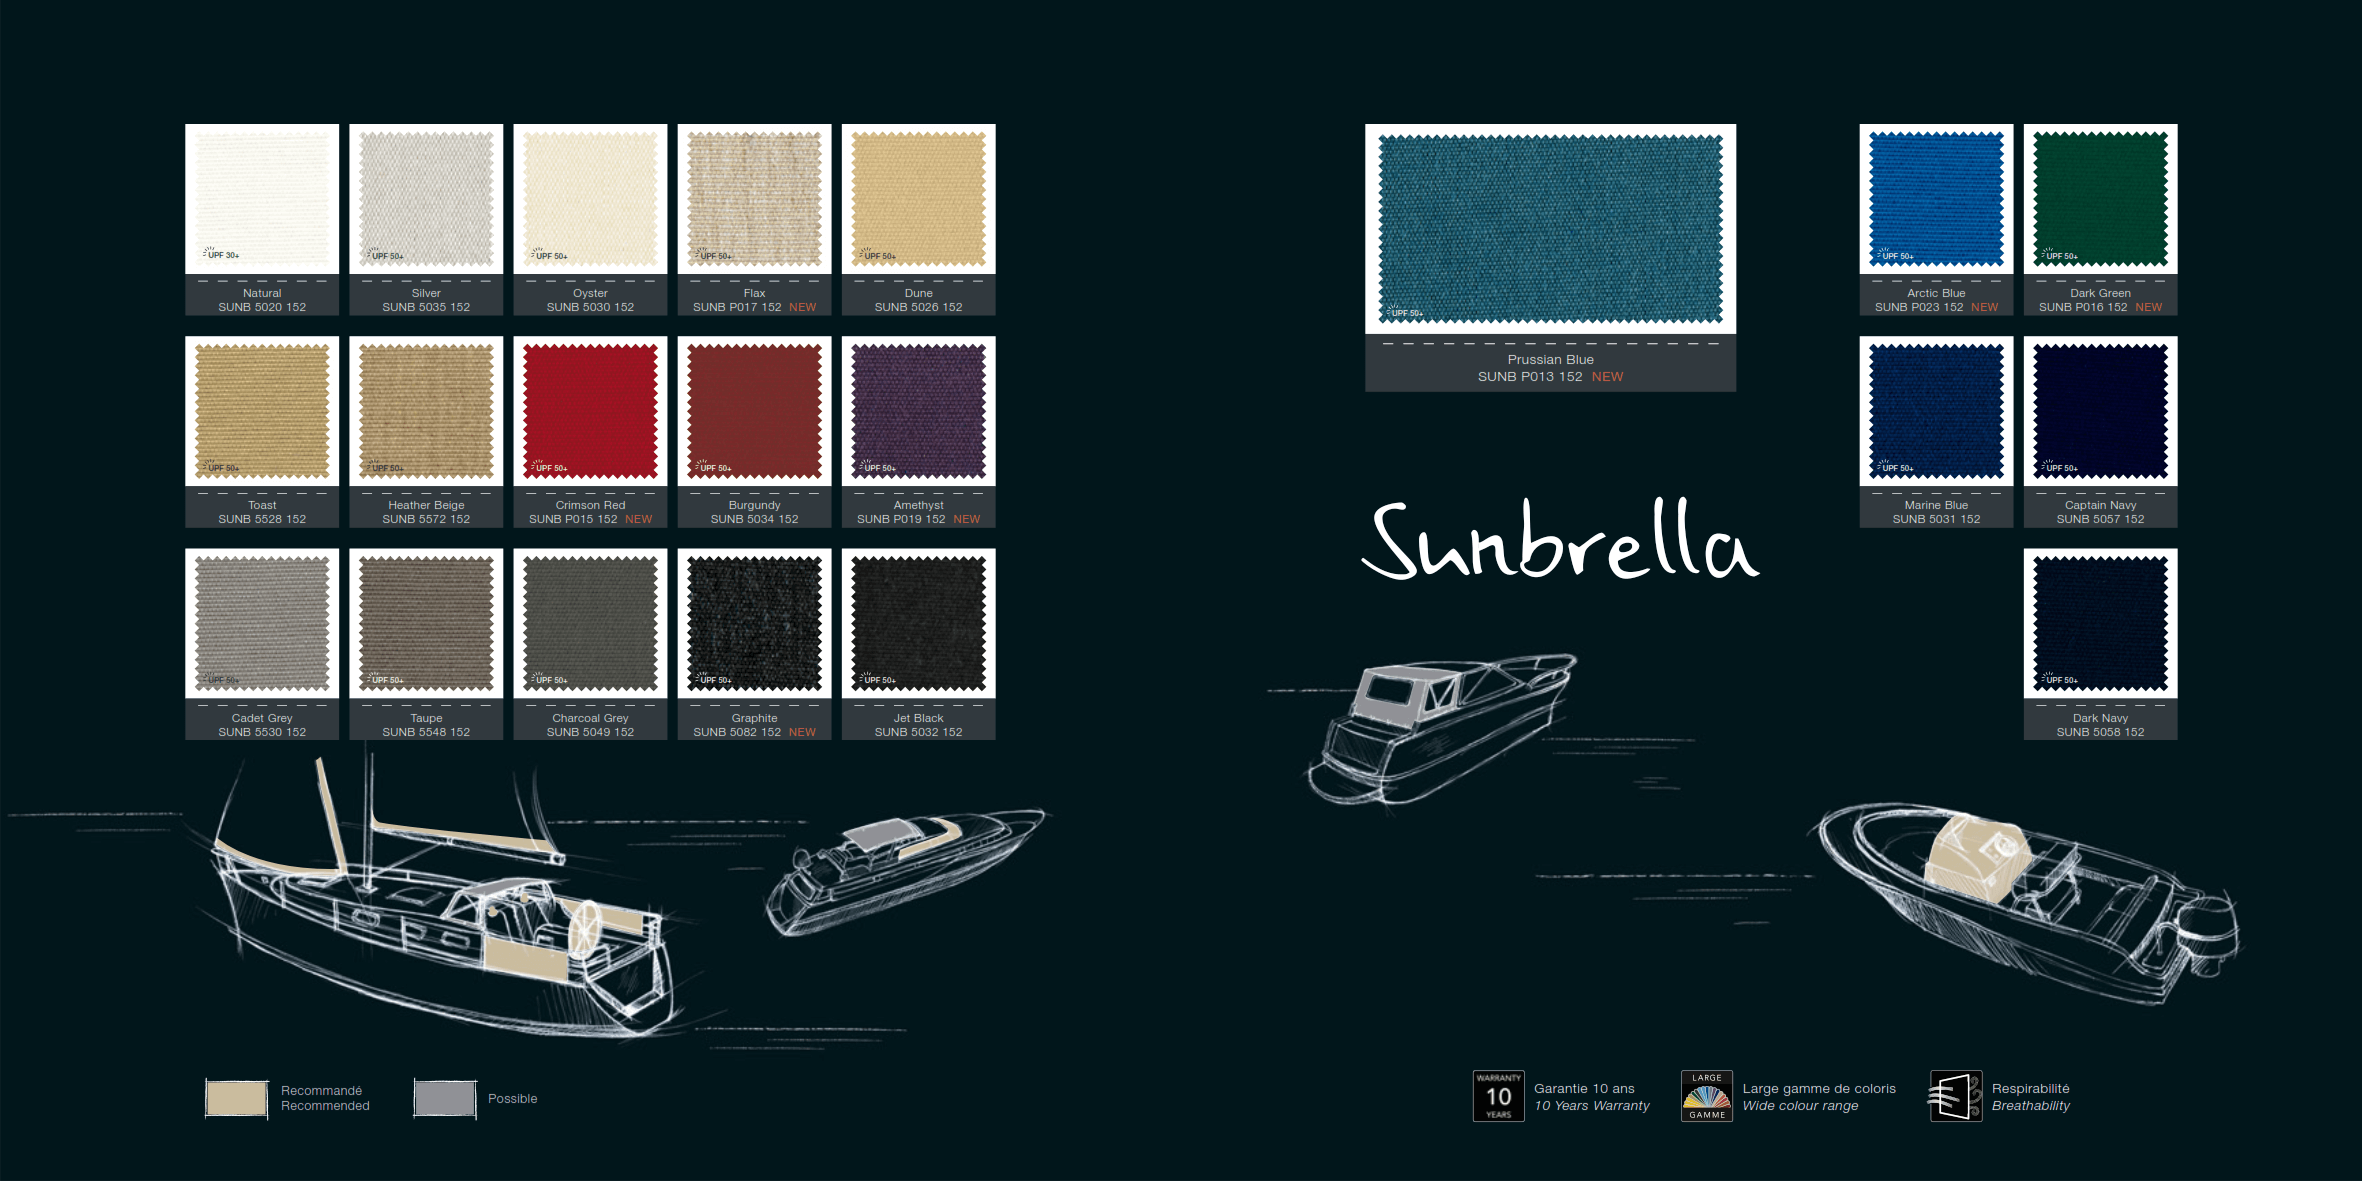 sunbrella imagine 2014 2016 fabric collection photo book en us 005